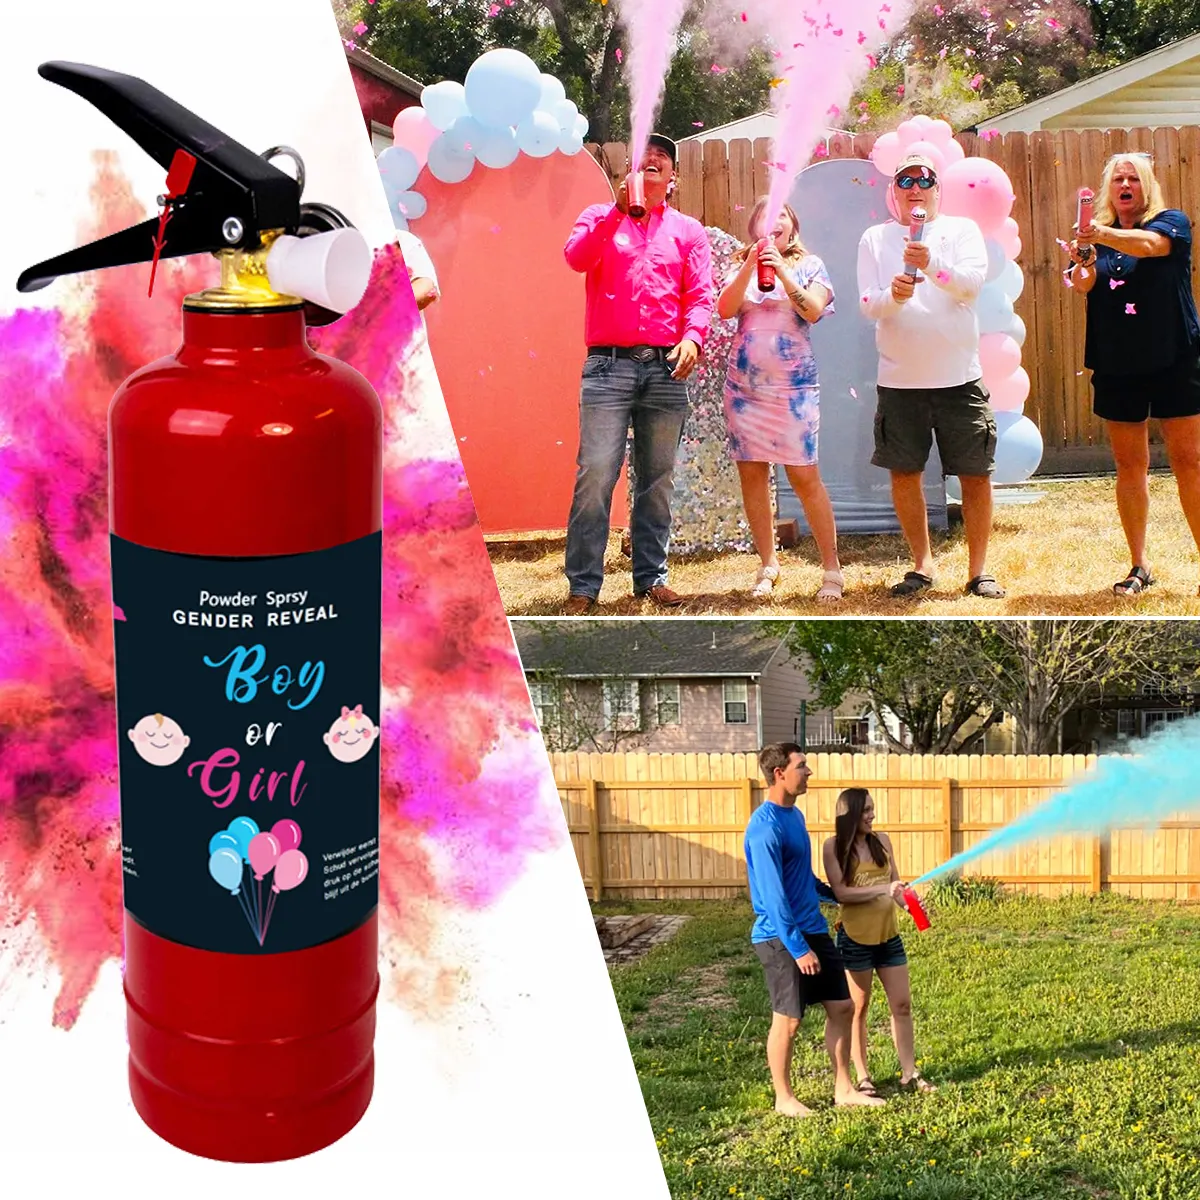 HEHE Girl or Boy Baby Gender Reveal Fire Extinguisher 250g Powder Smoke Color Blasters